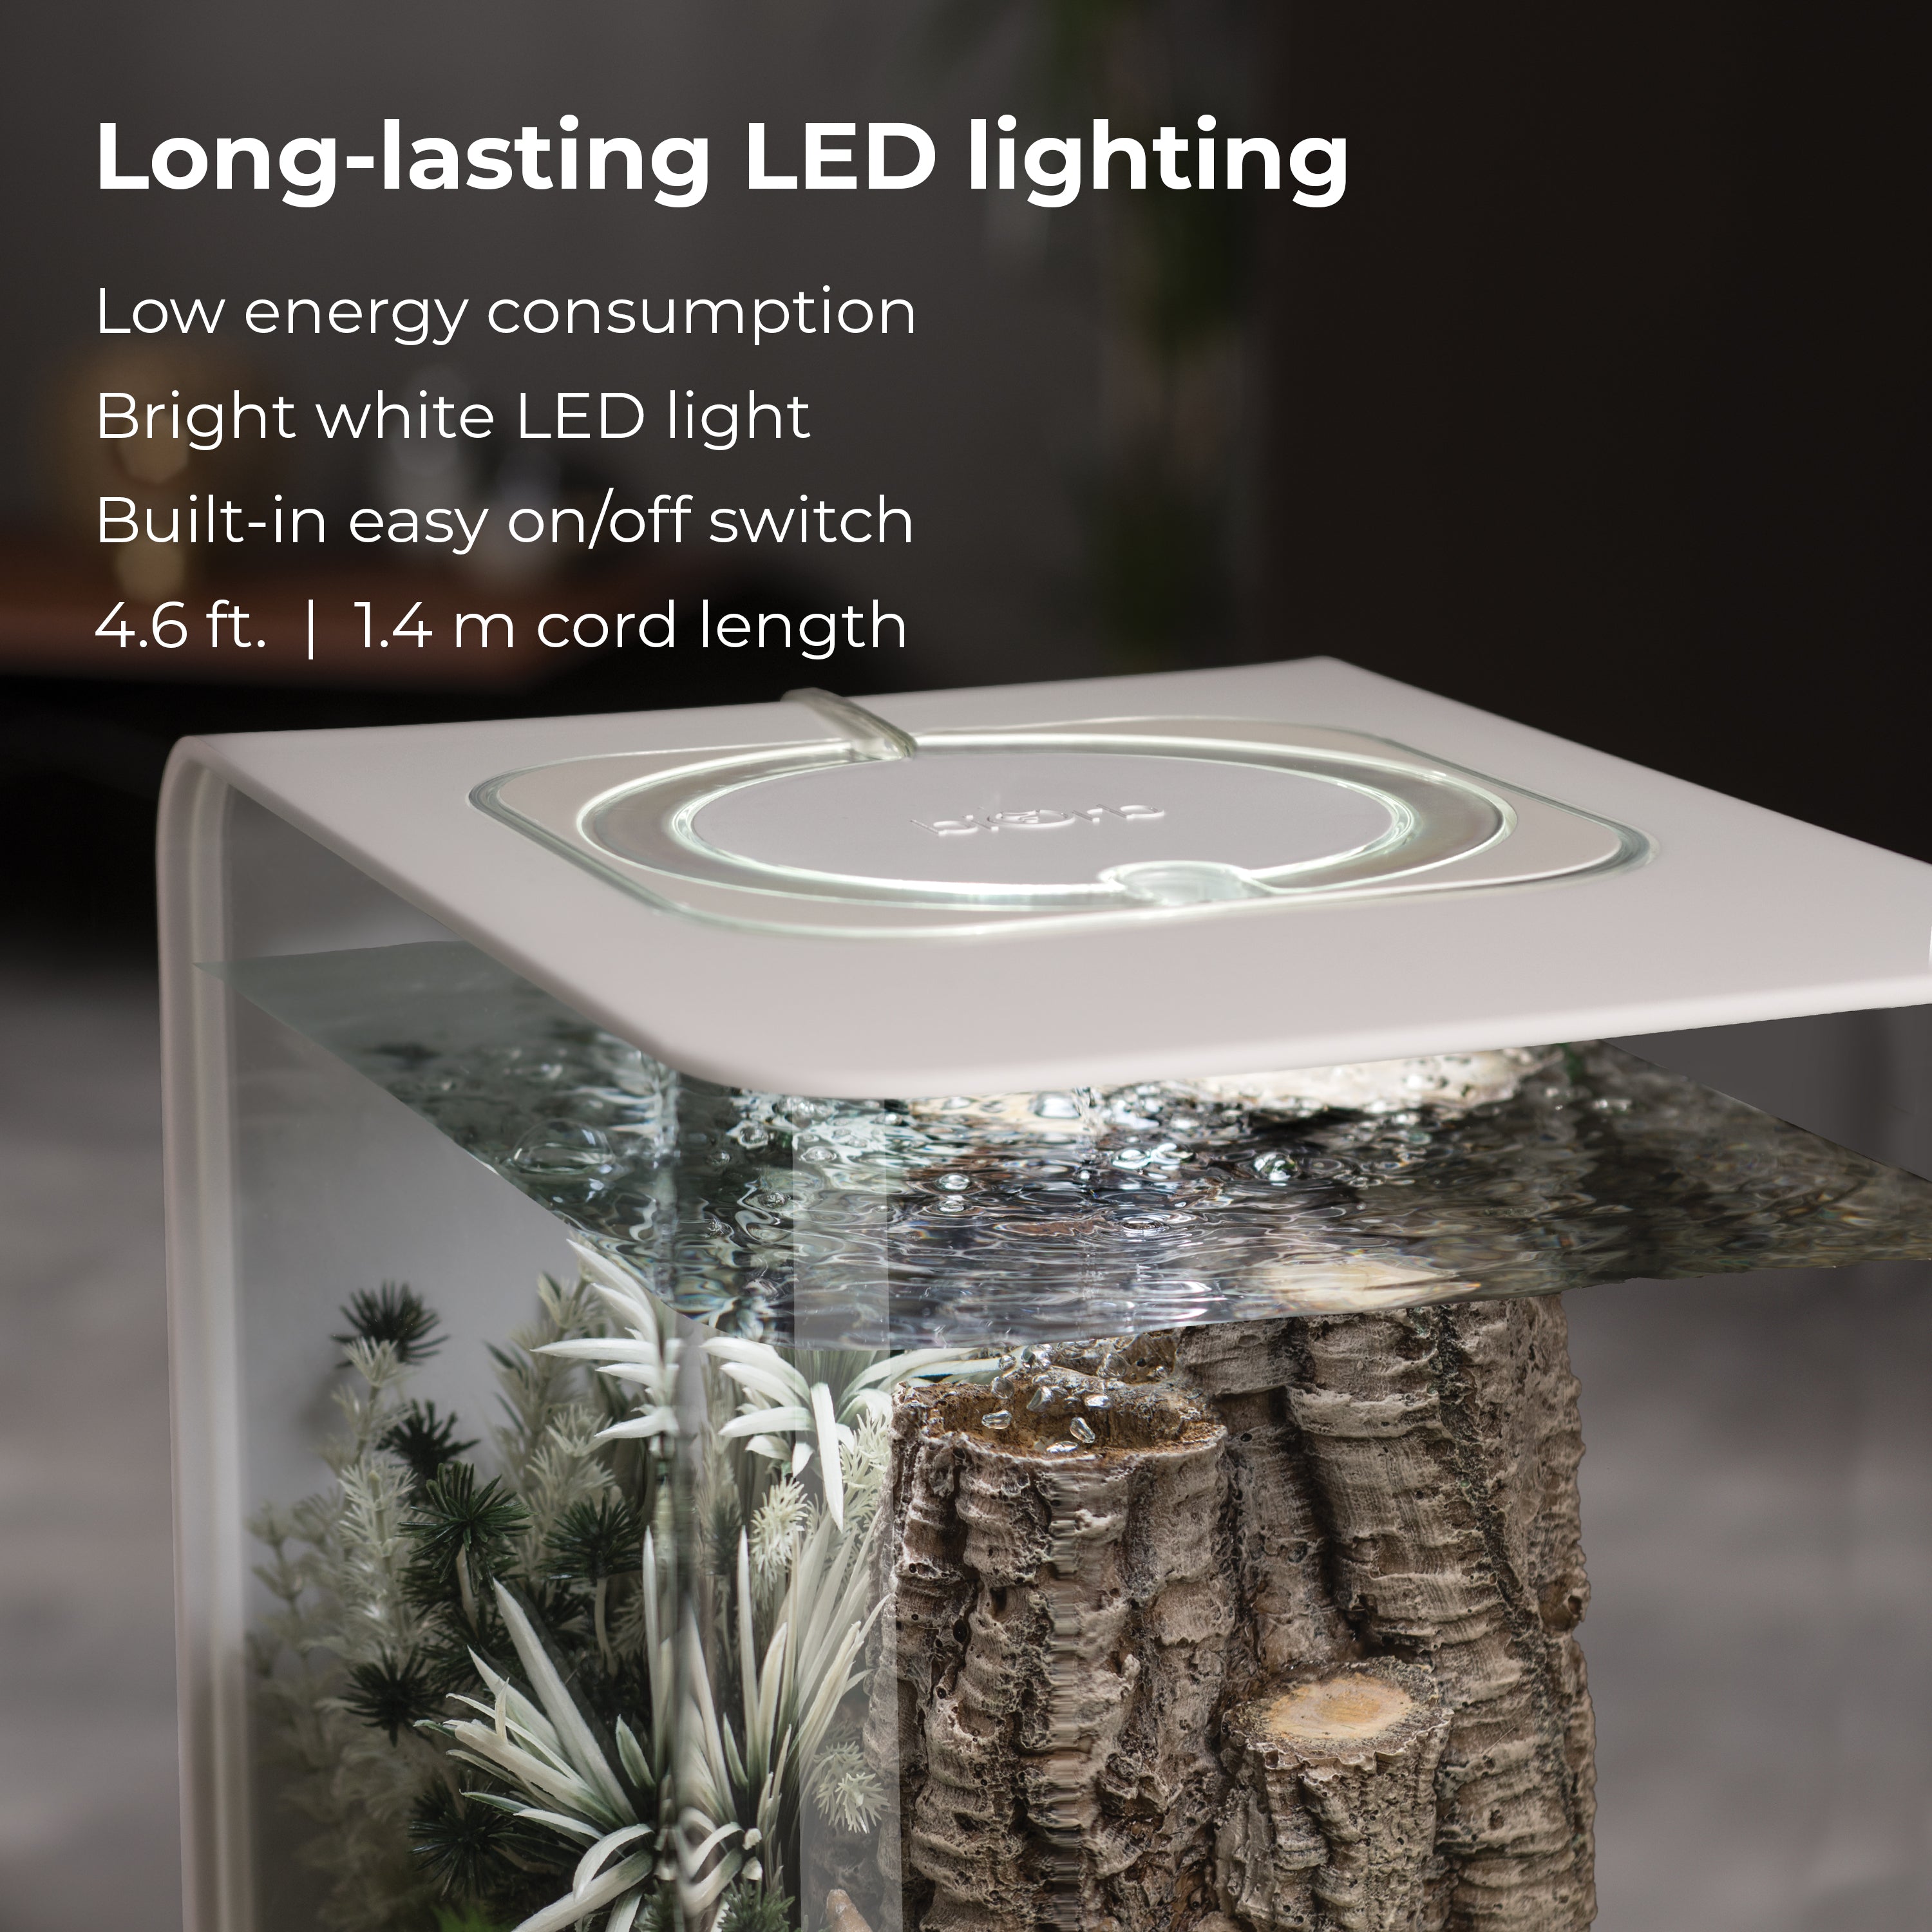 FLOW 30 Aquarium with Standard Light - 8 gallon features Long-lasting LED lighting